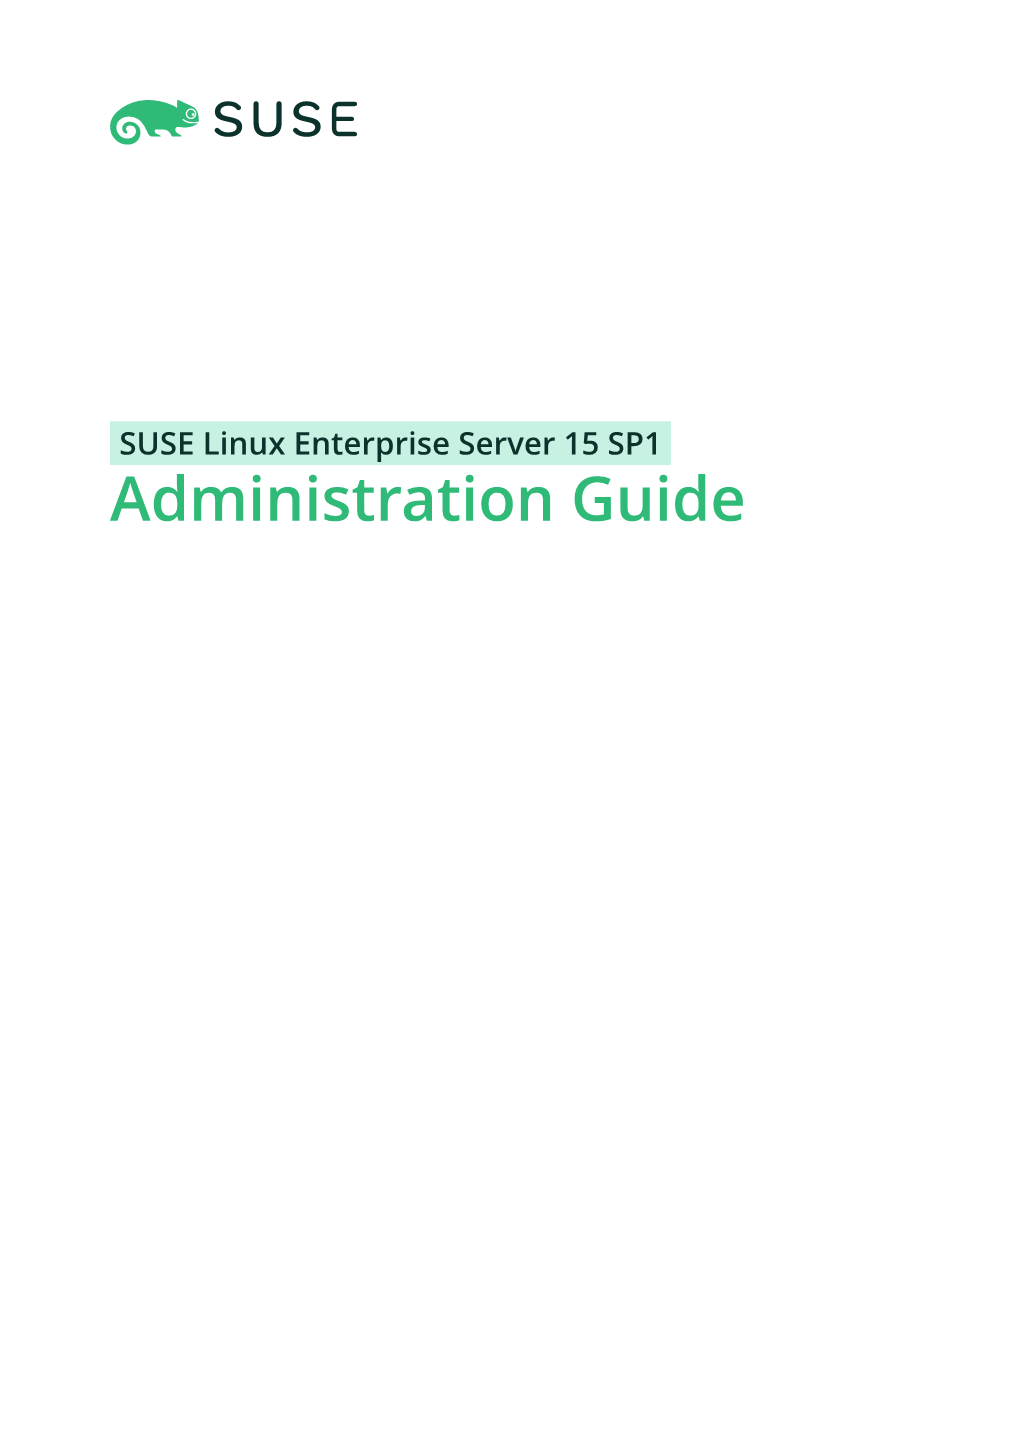 Administration Guide Administration Guide SUSE Linux Enterprise Server 15 SP1